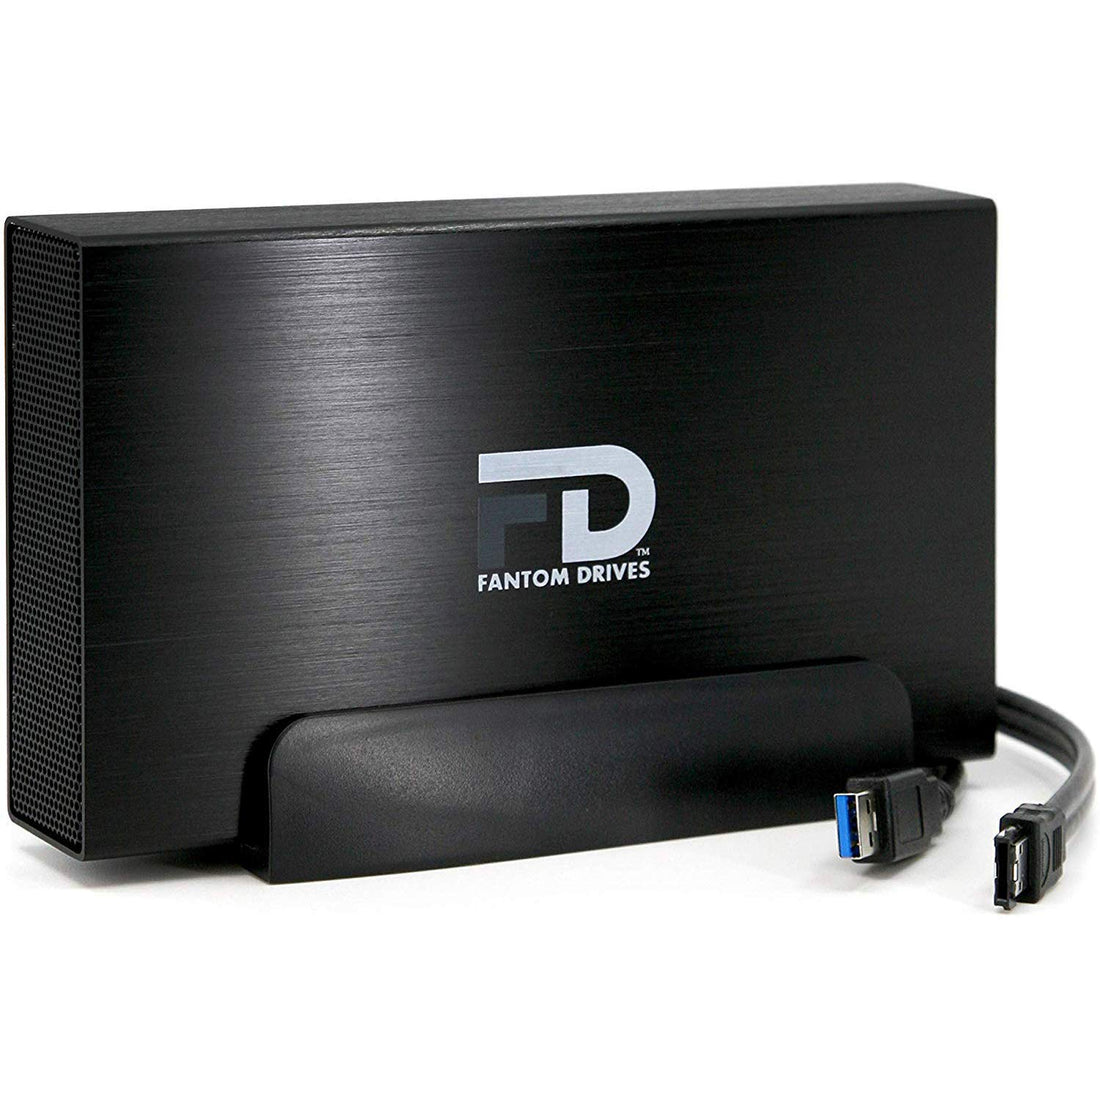 Fantom Drives 2TB DVR External Hard Drive Expander - USB 3.0 & eSATA - Supports Directv, Dish, Motorola, Arris and More - Black Aluminum